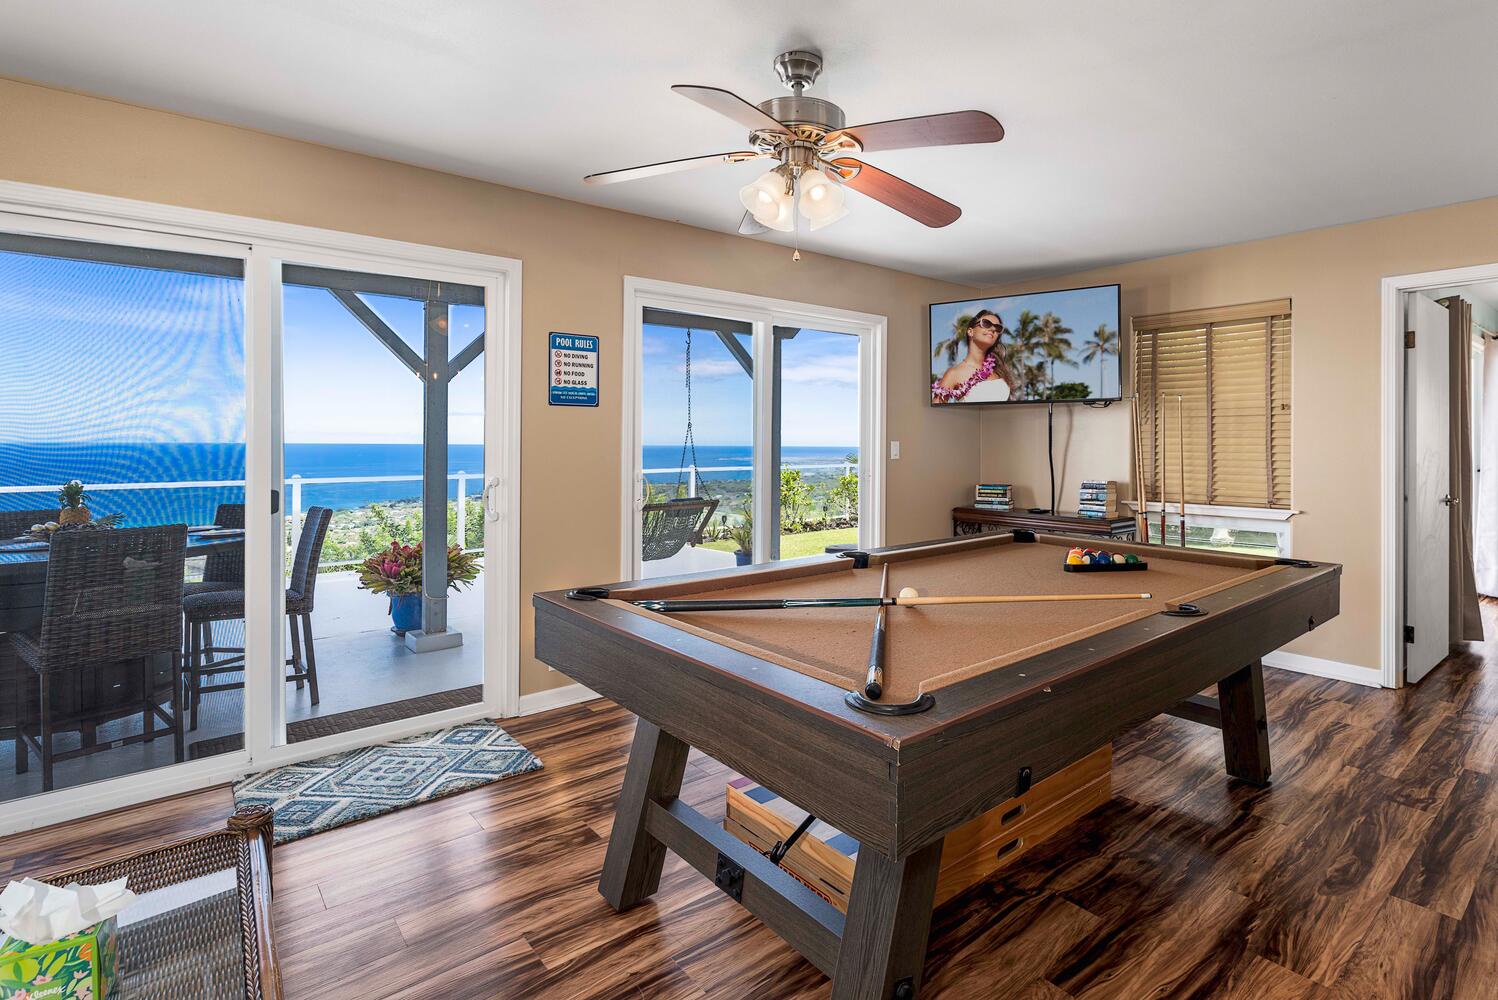 Kailua Kona Vacation Rentals, Honu O Kai (Turtle of the Sea) - Play a game of billiards while enjoying an ocean view